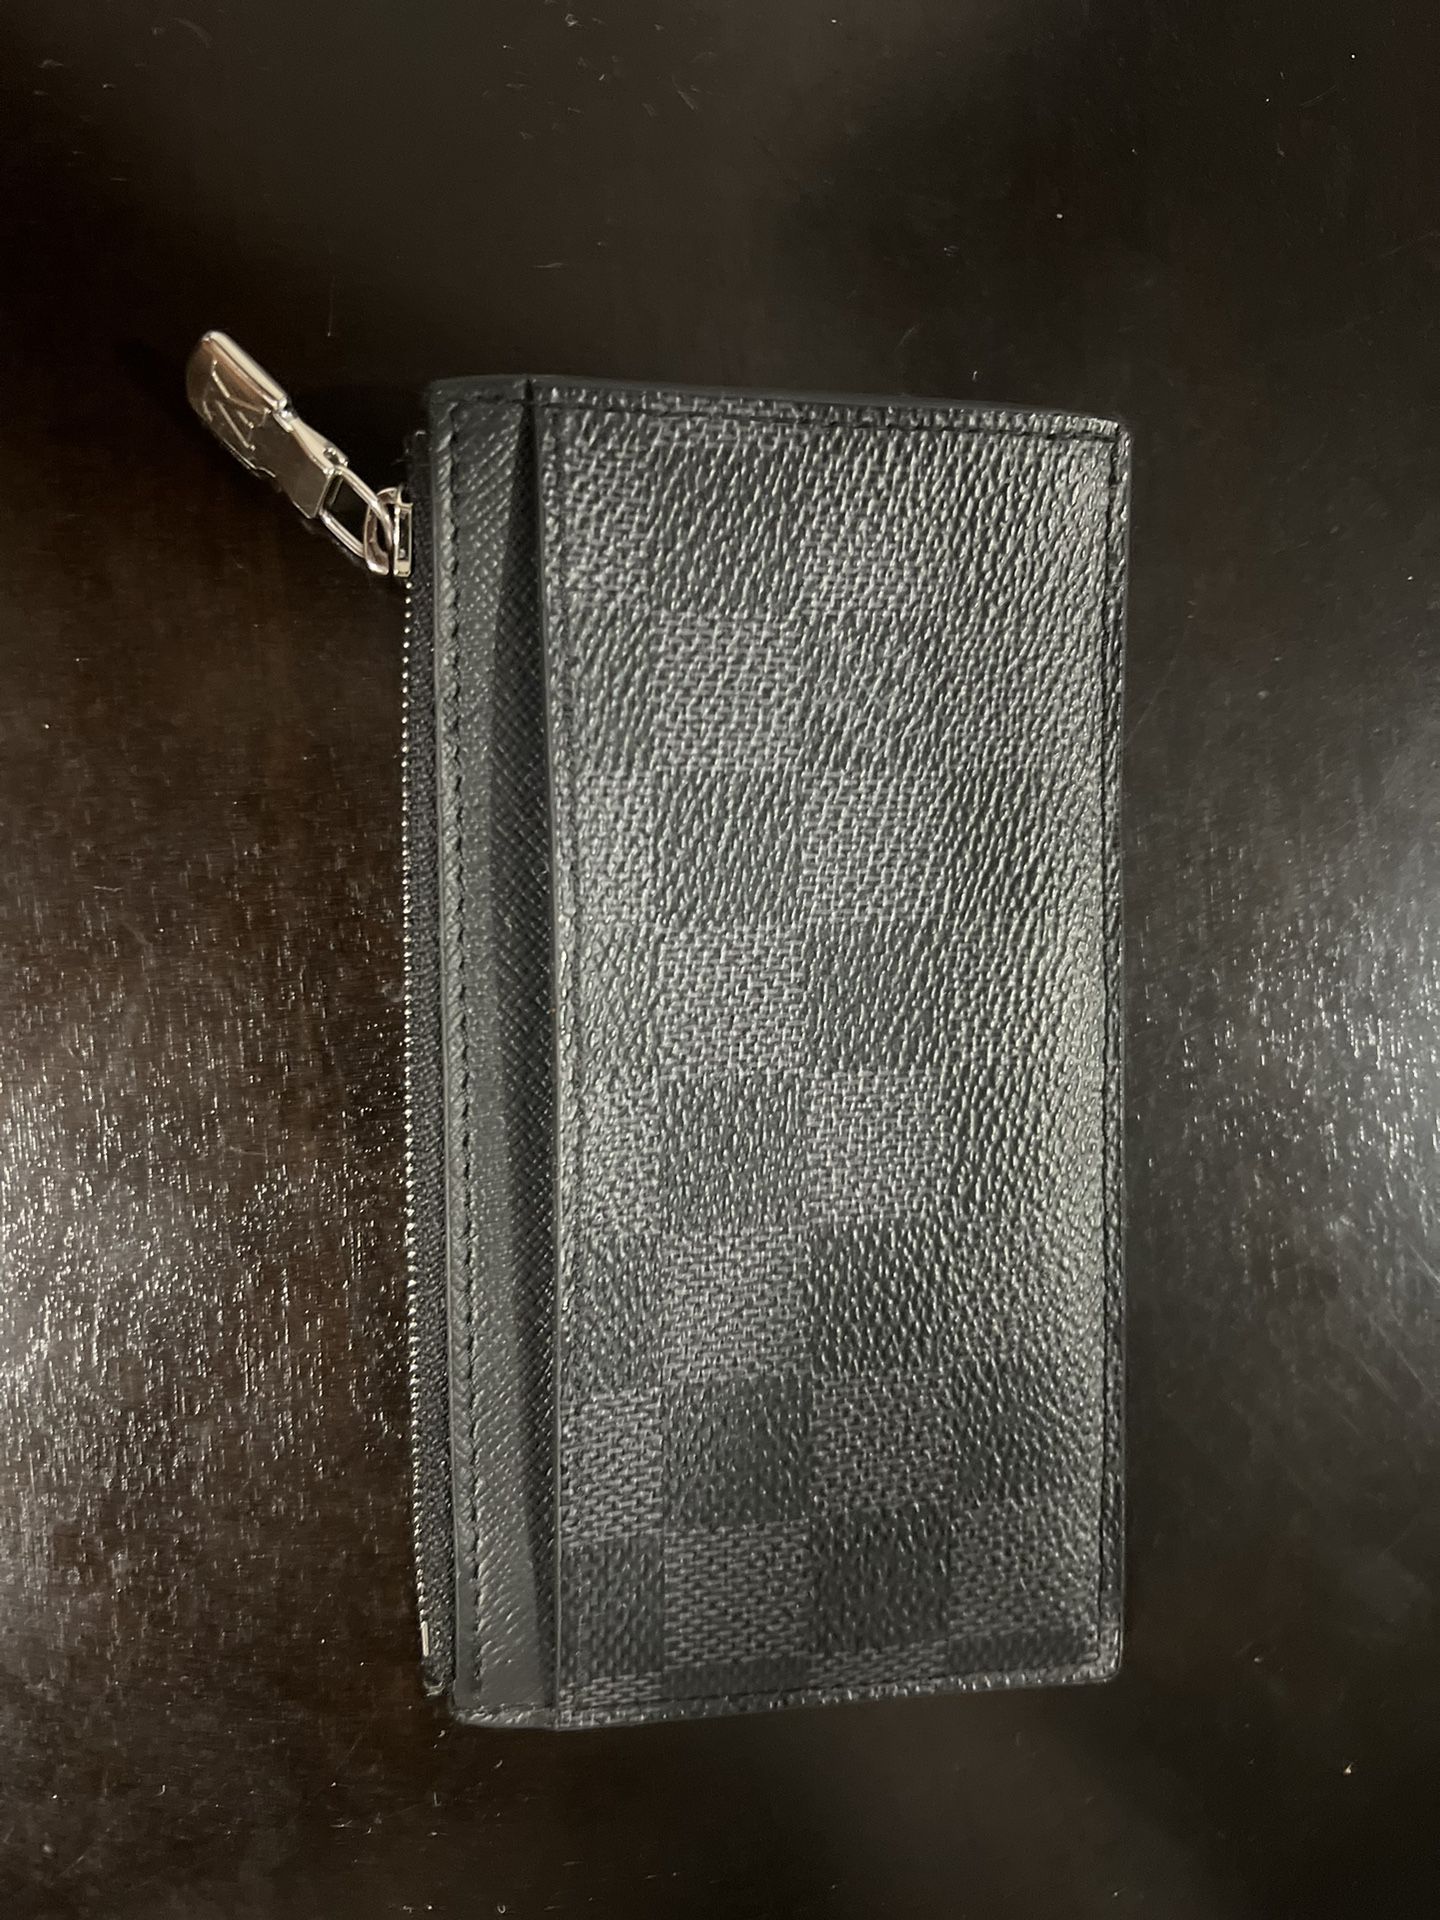 Louis Vuitton DAMIER GRAPHITE LV COIN CARD HOLDER Black Coin Cases N64038